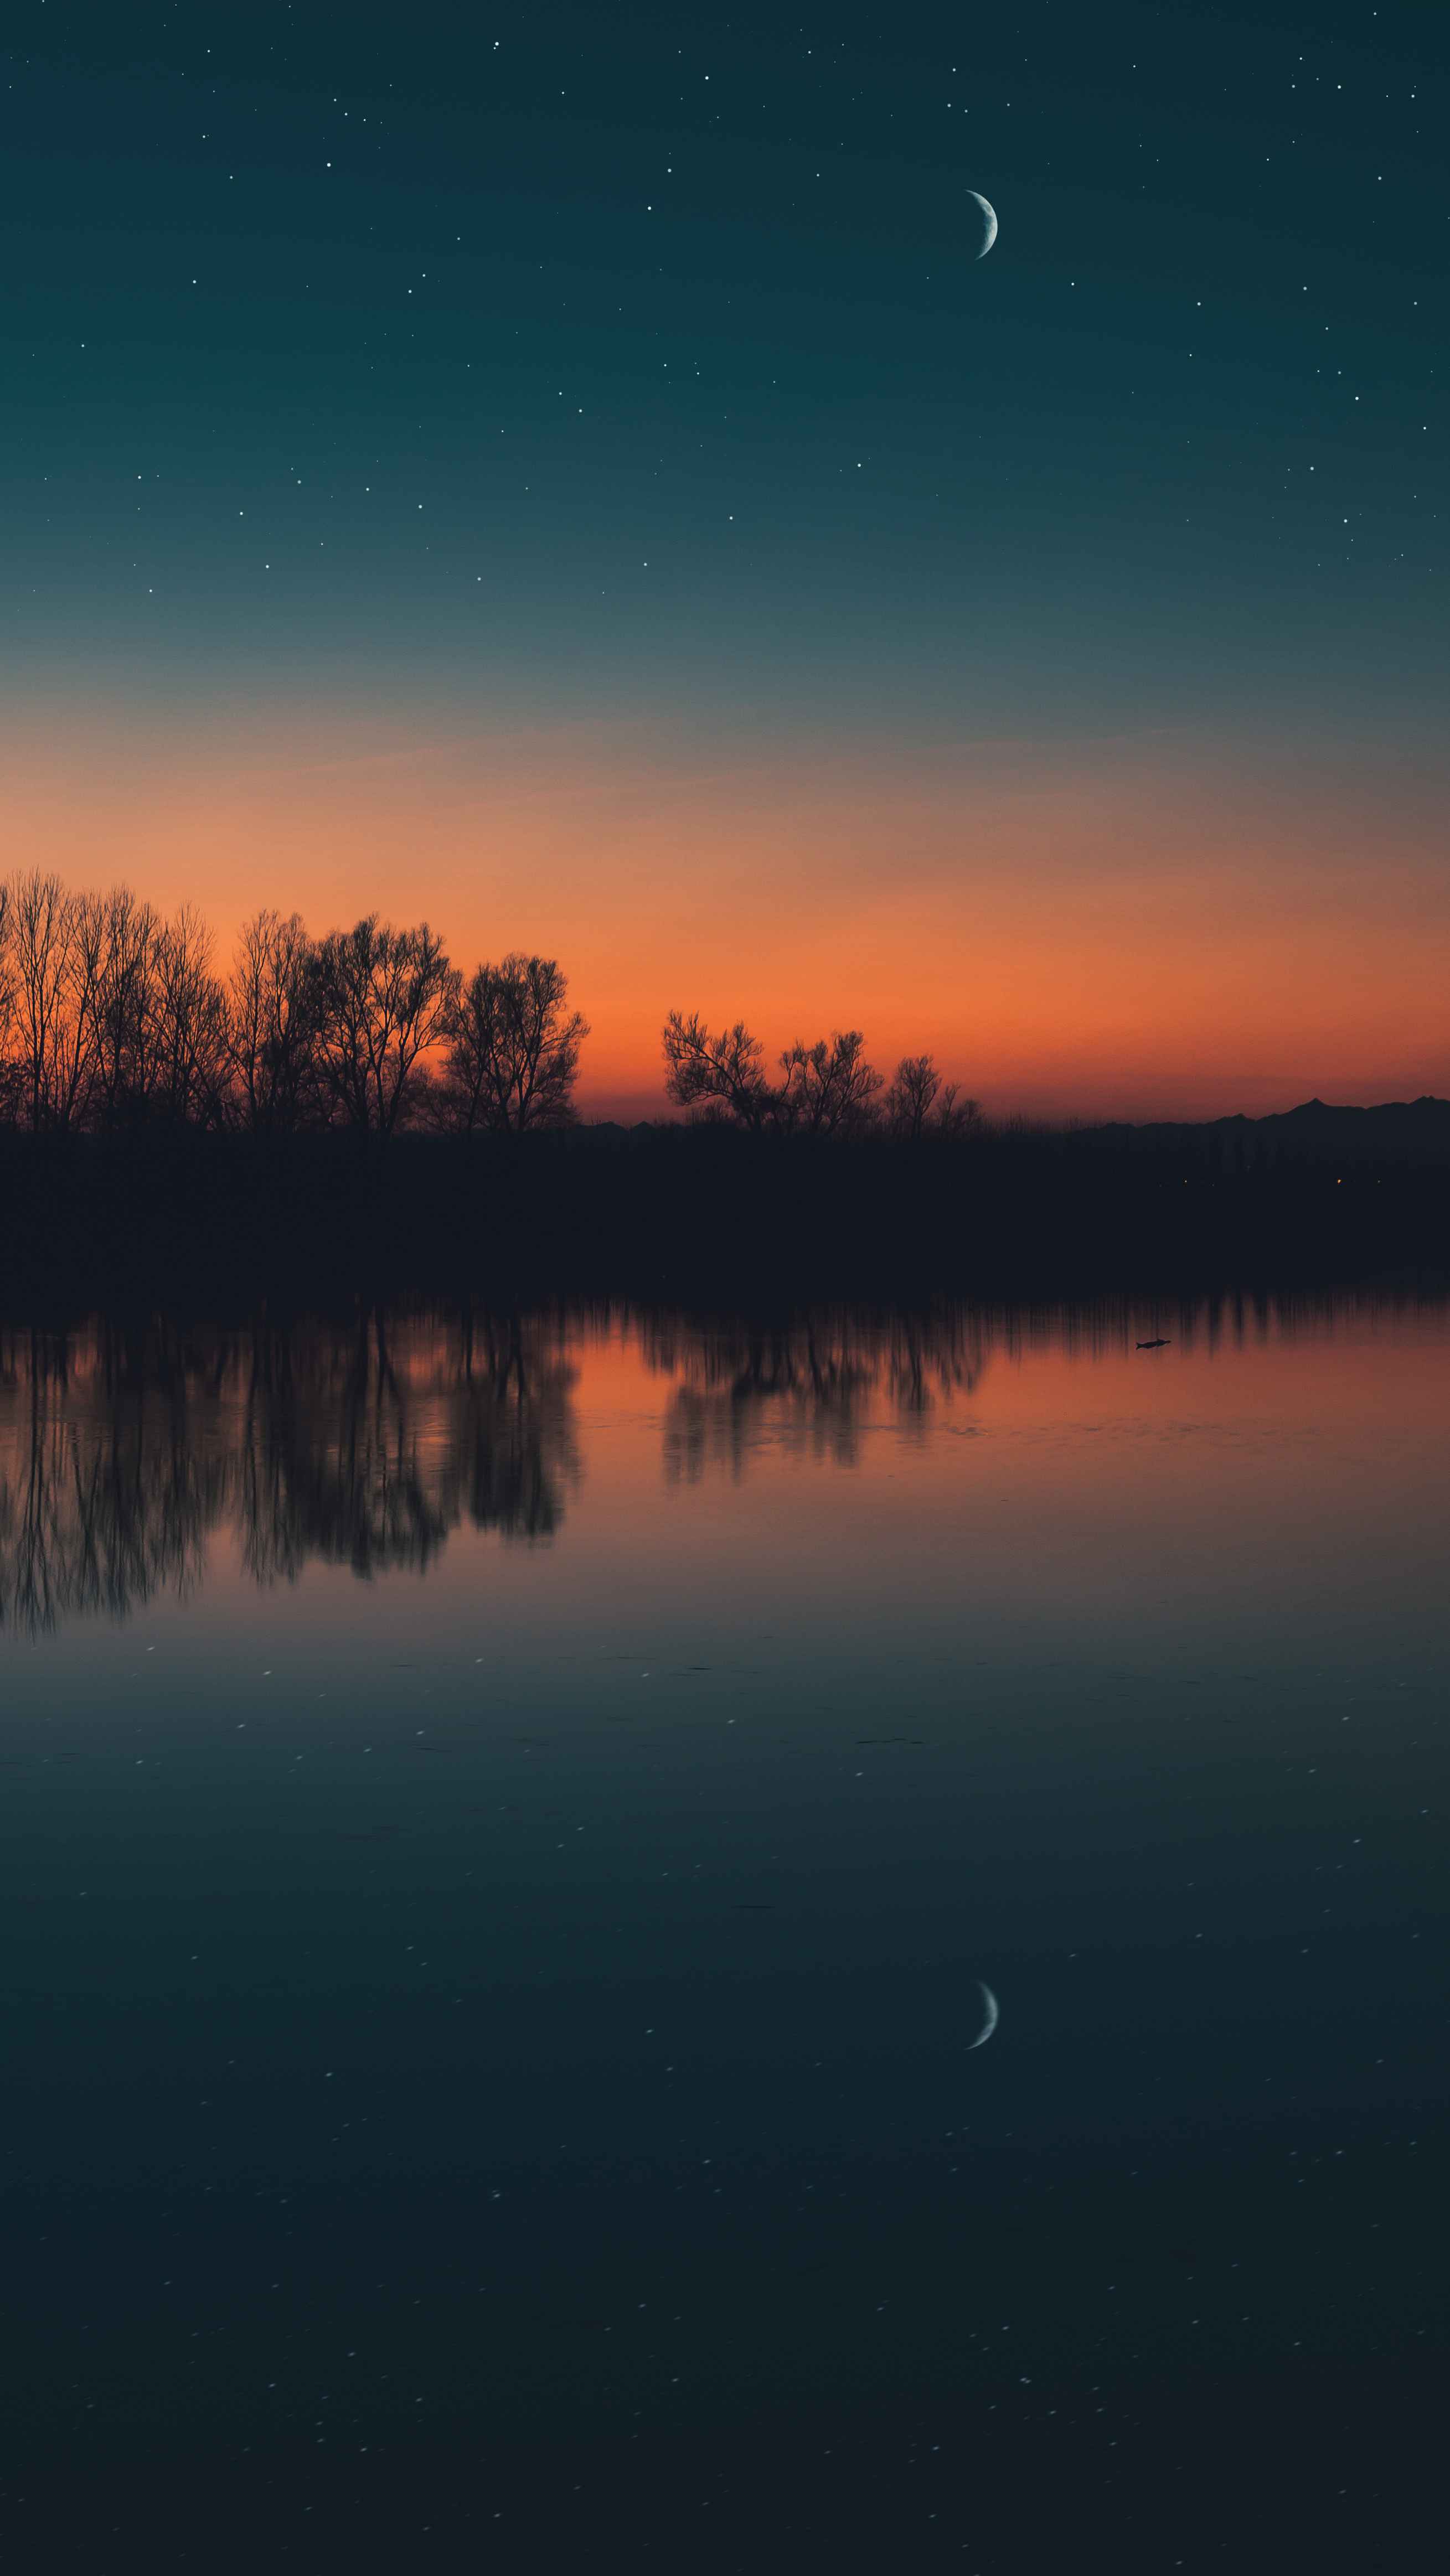 Lake Reflection Evening Moon IPhone Wallpaper Wallpaper, iPhone Wallpaper